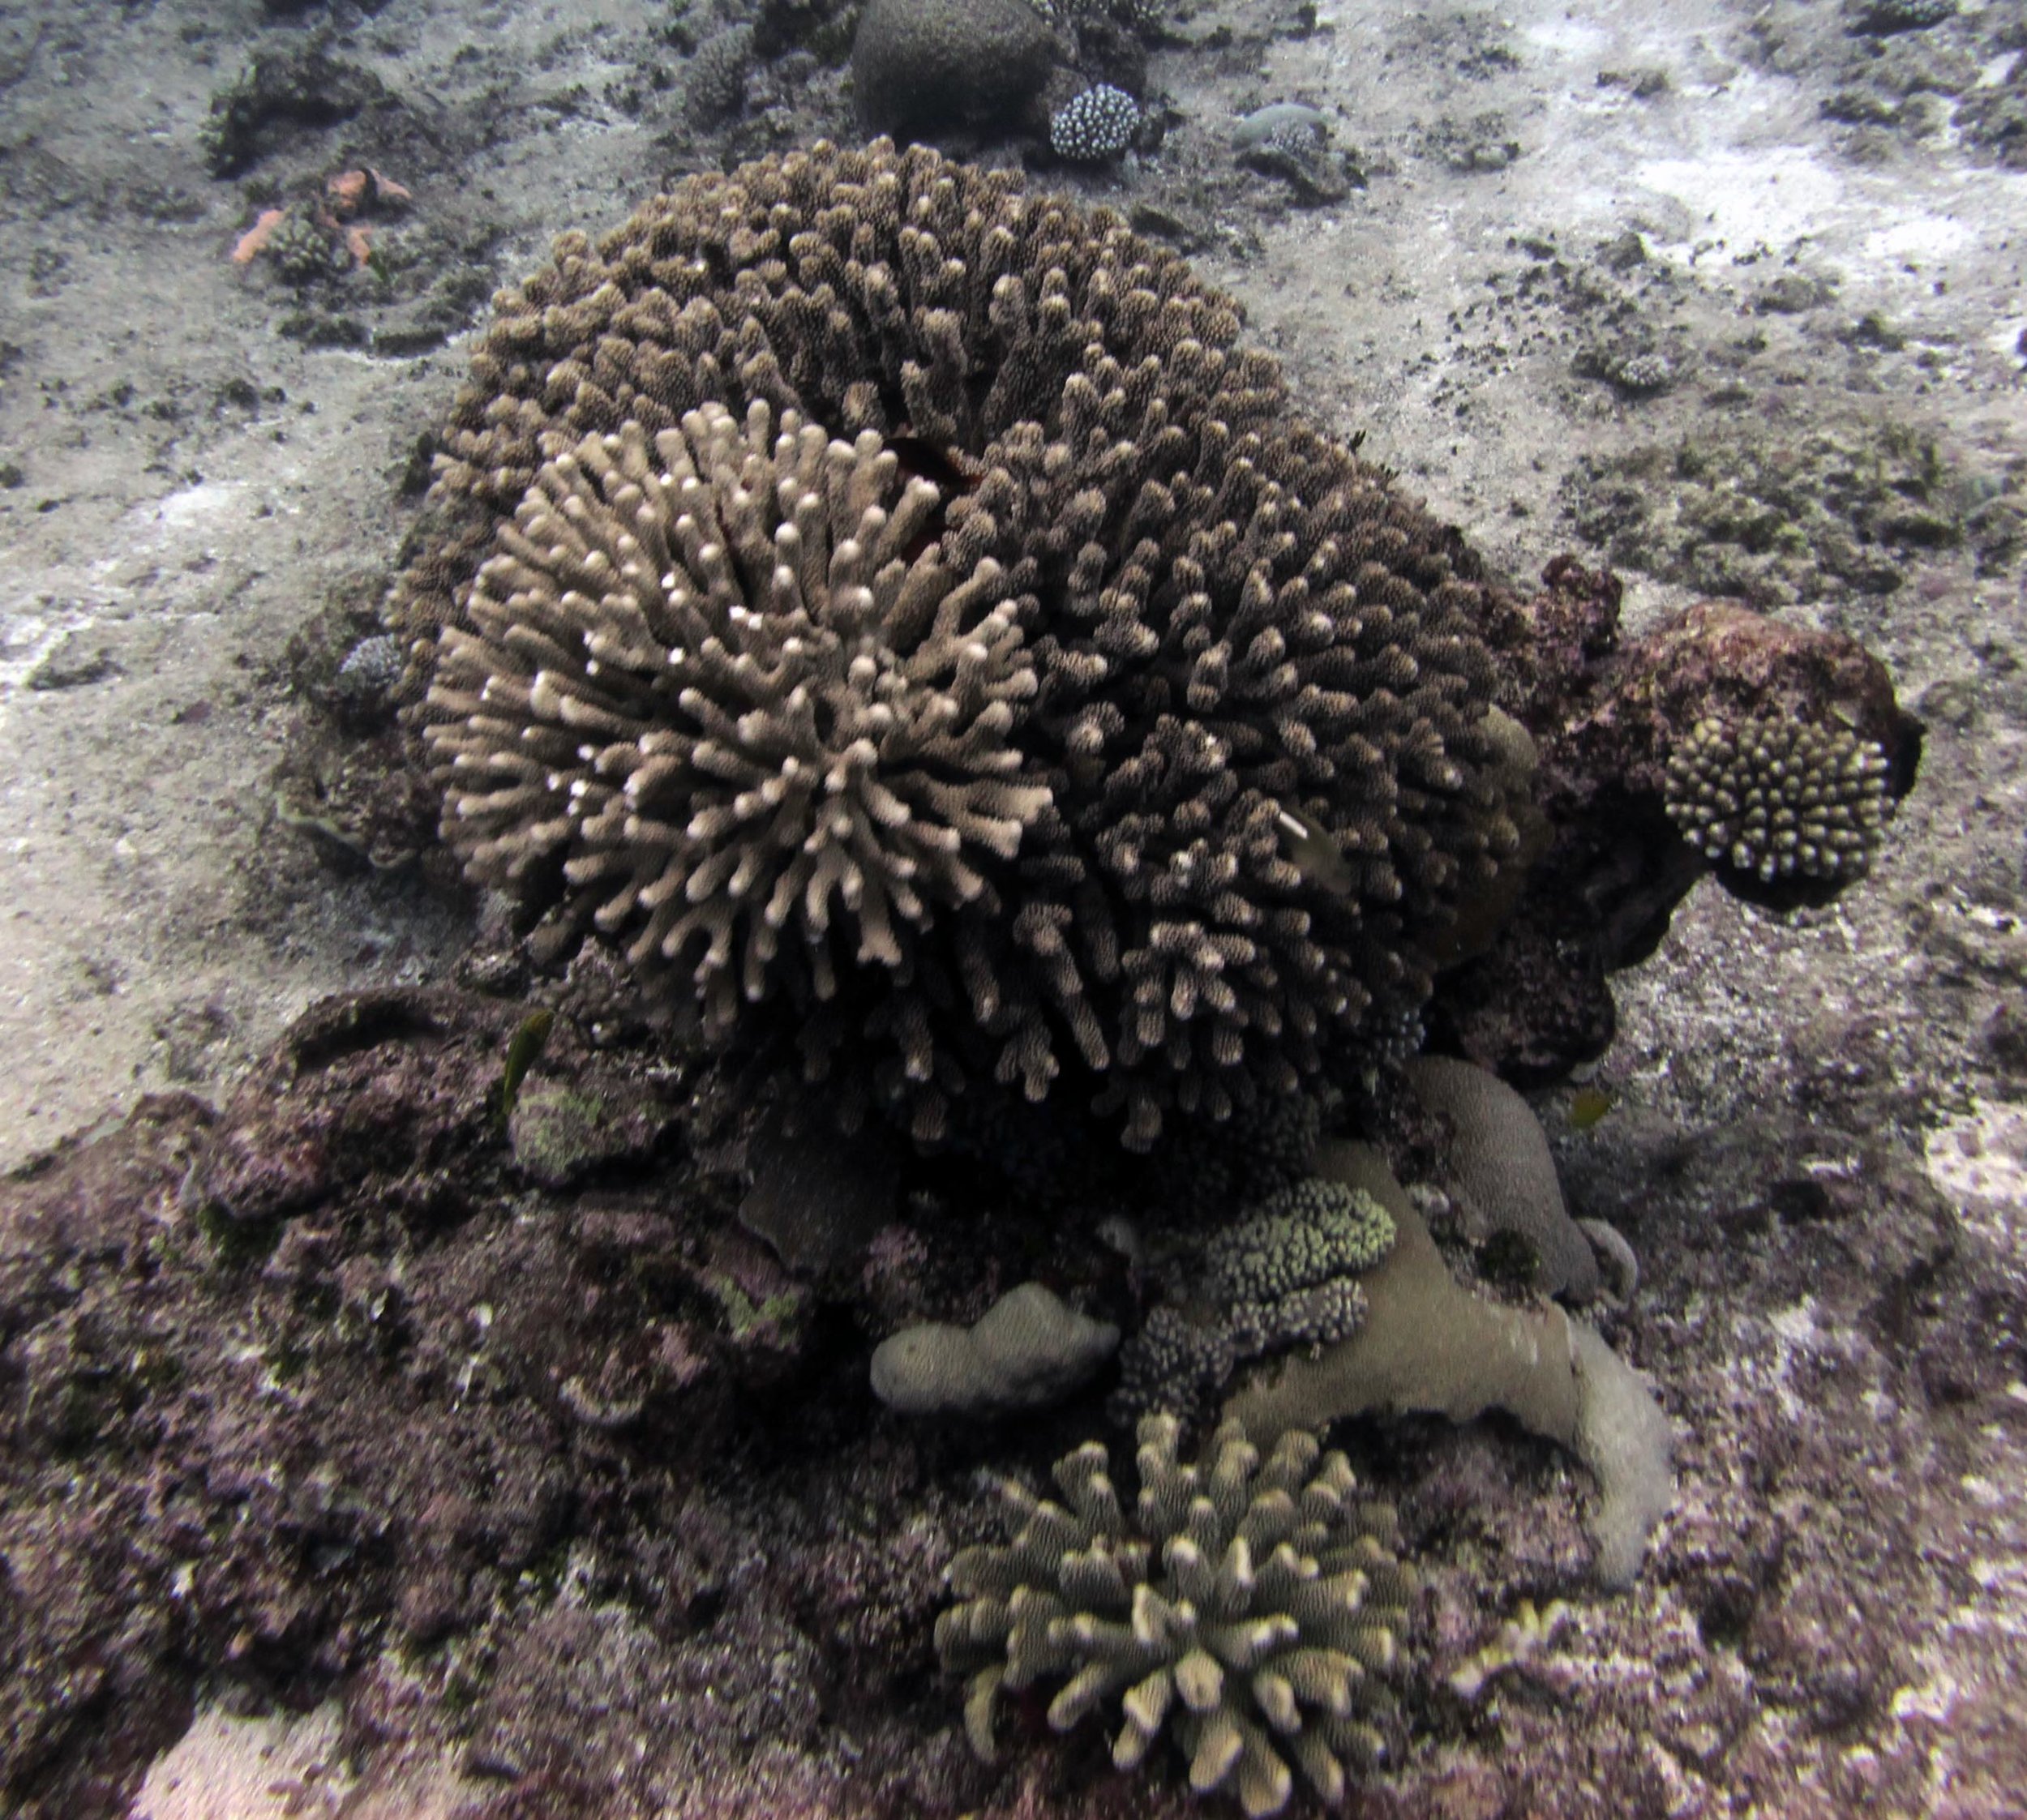 pocilloporid reef.jpg